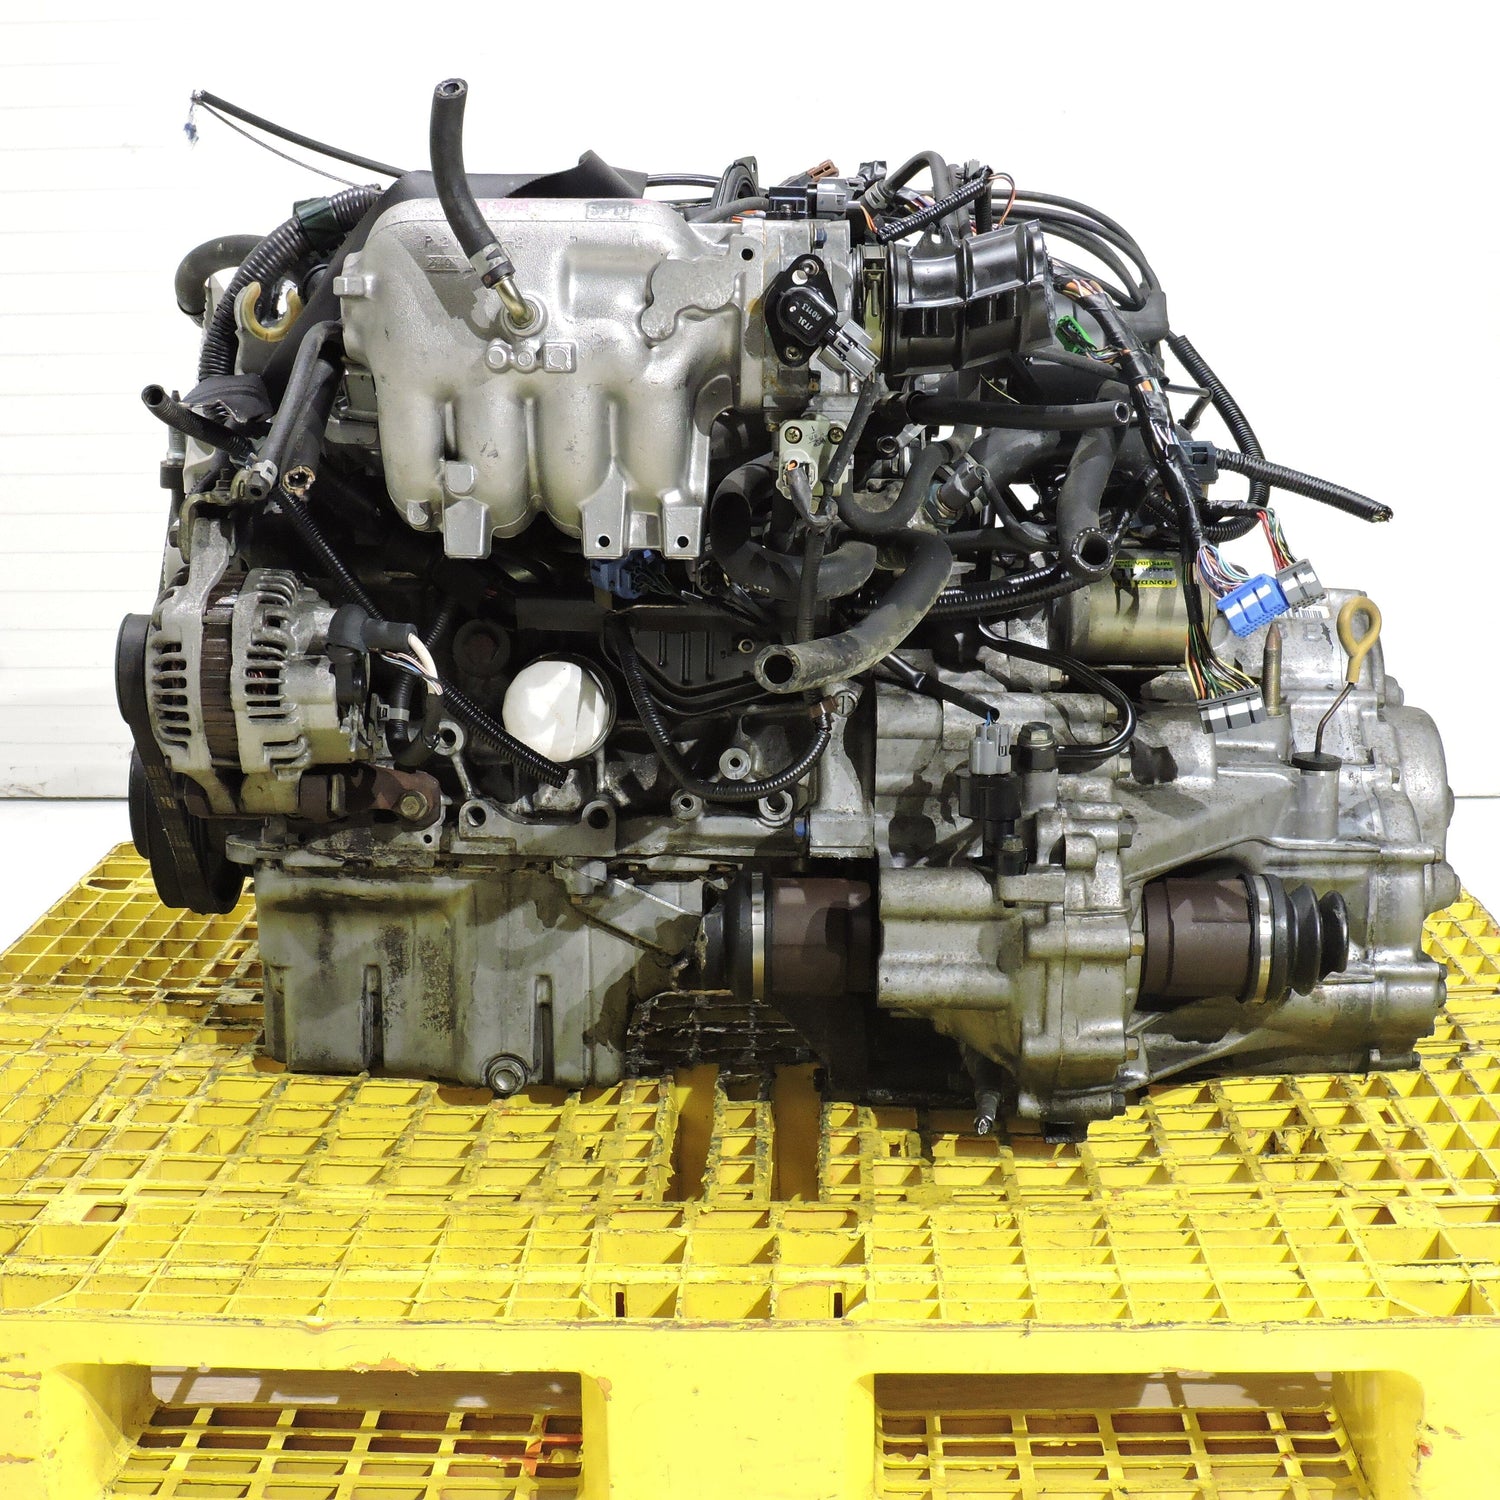 Honda Civic 1996-2000 1.6L 4-Cylinder VTEC JDM Engine Automatic Transmission Swap - D16Y6 - 1992 honda civic - 7